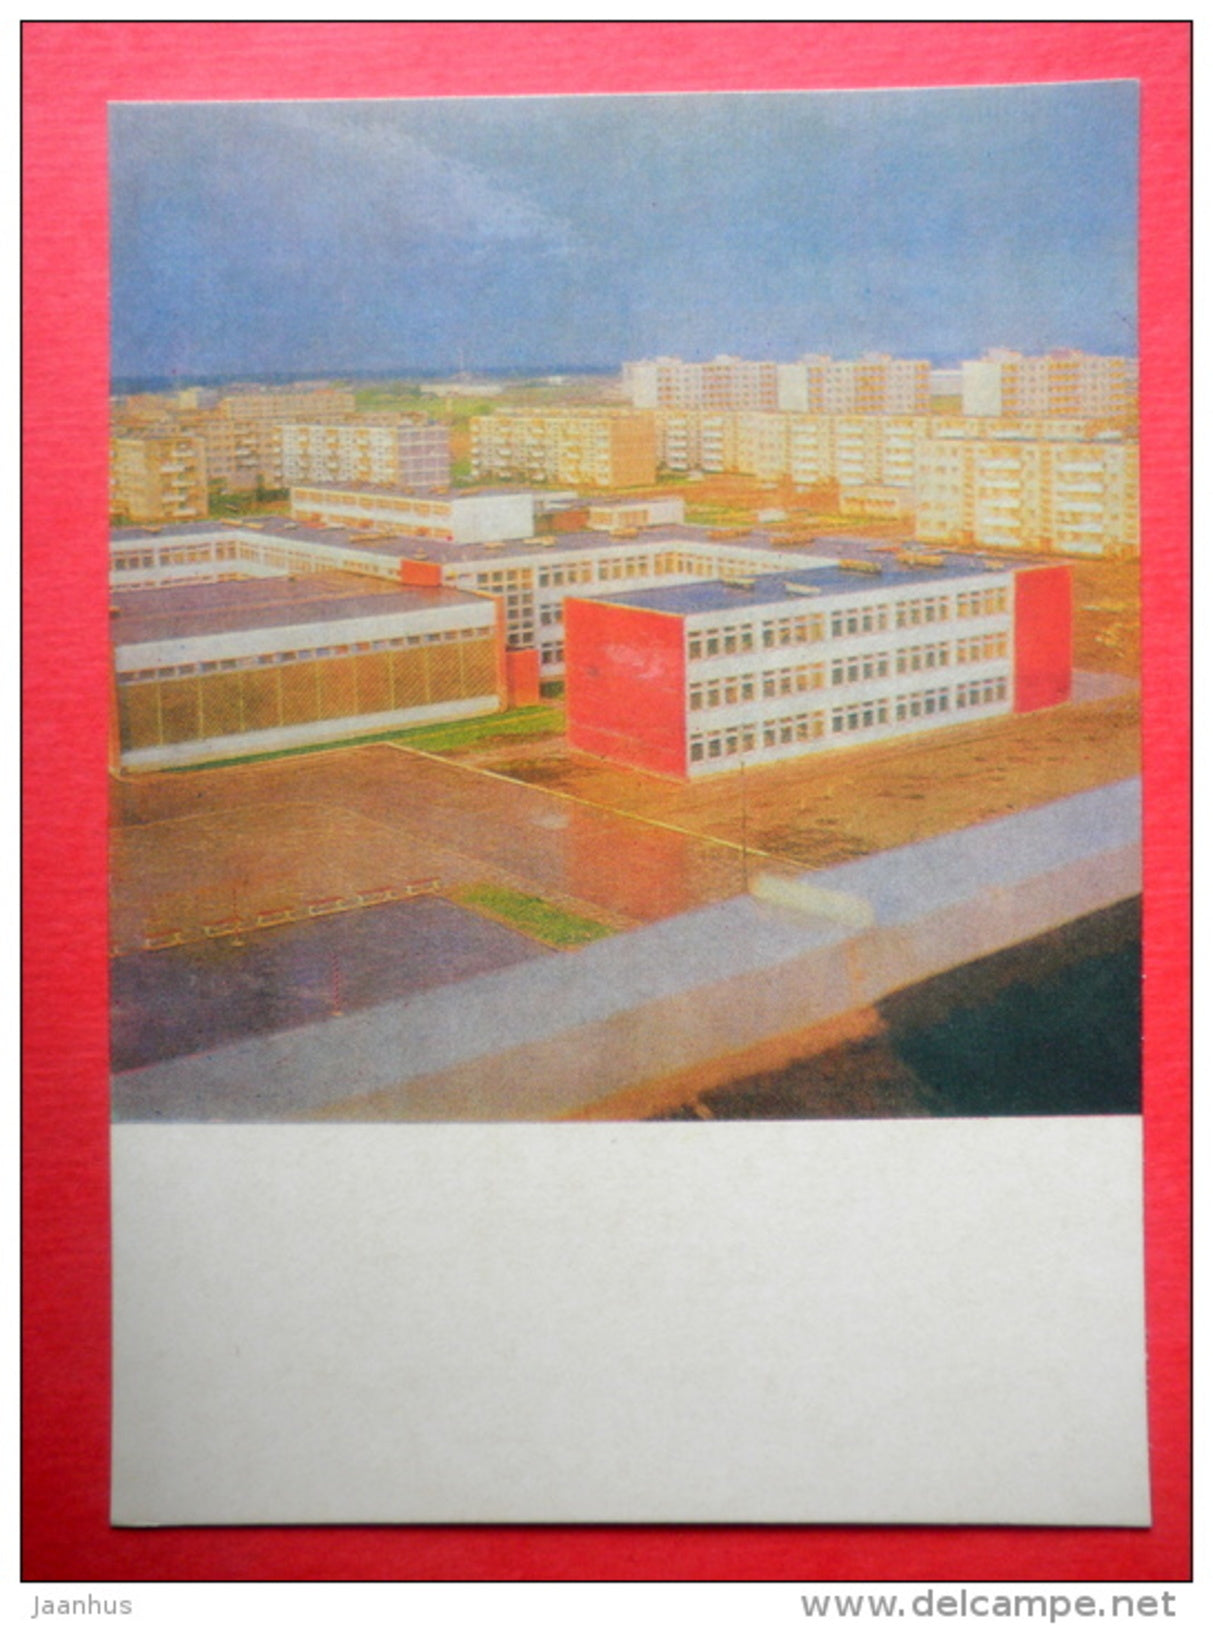 New City District Dainava - Kaunas - 1974 - Lithuania USSR - unused - JH Postcards